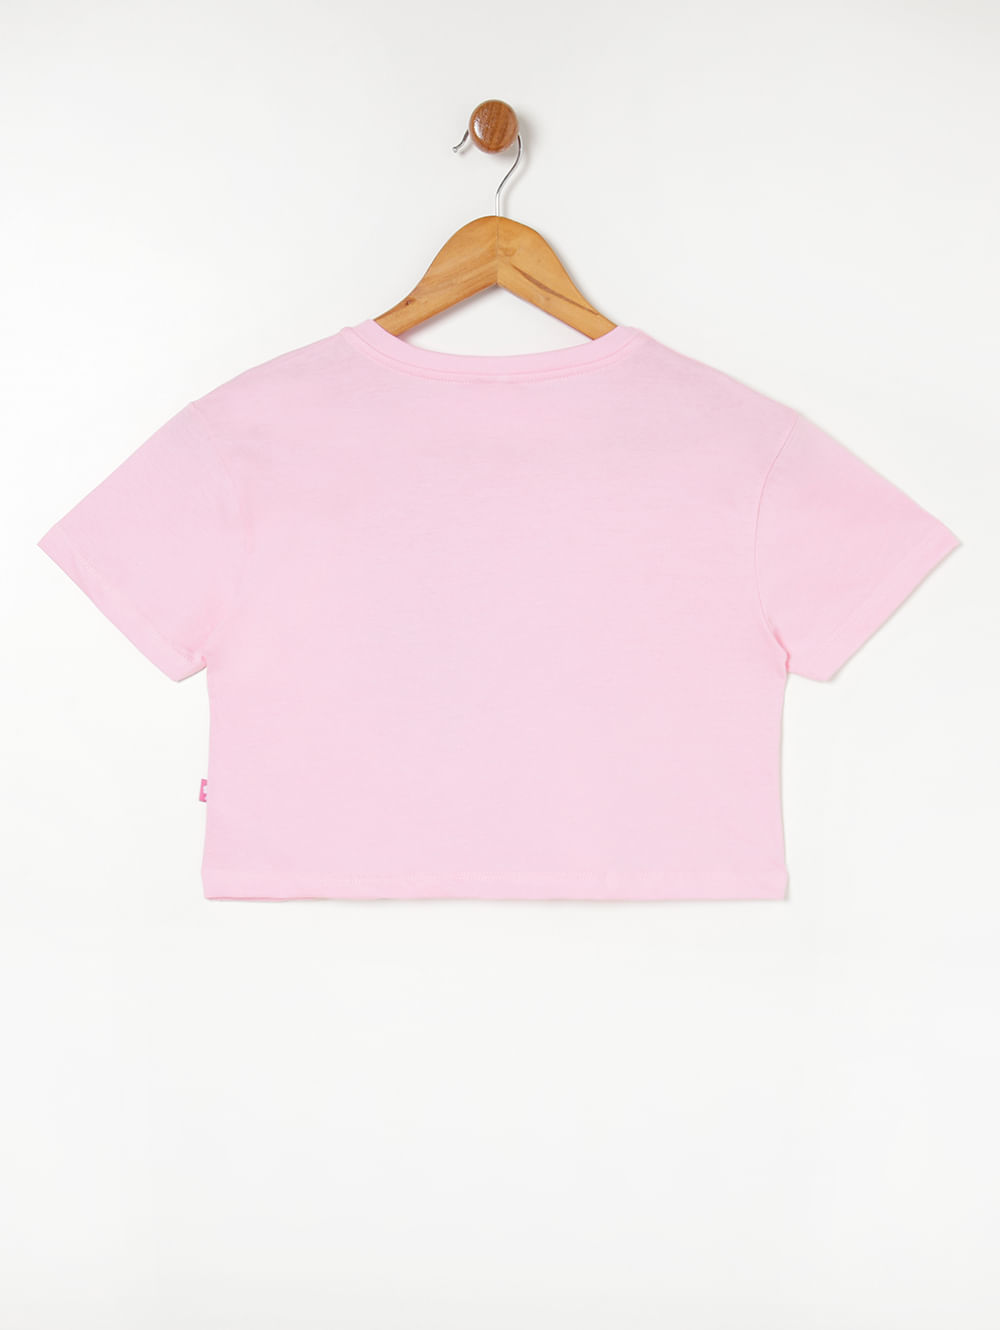 Blusa Cropped Regata com Nó Frontal Infanto Juvenil em Malha Pink